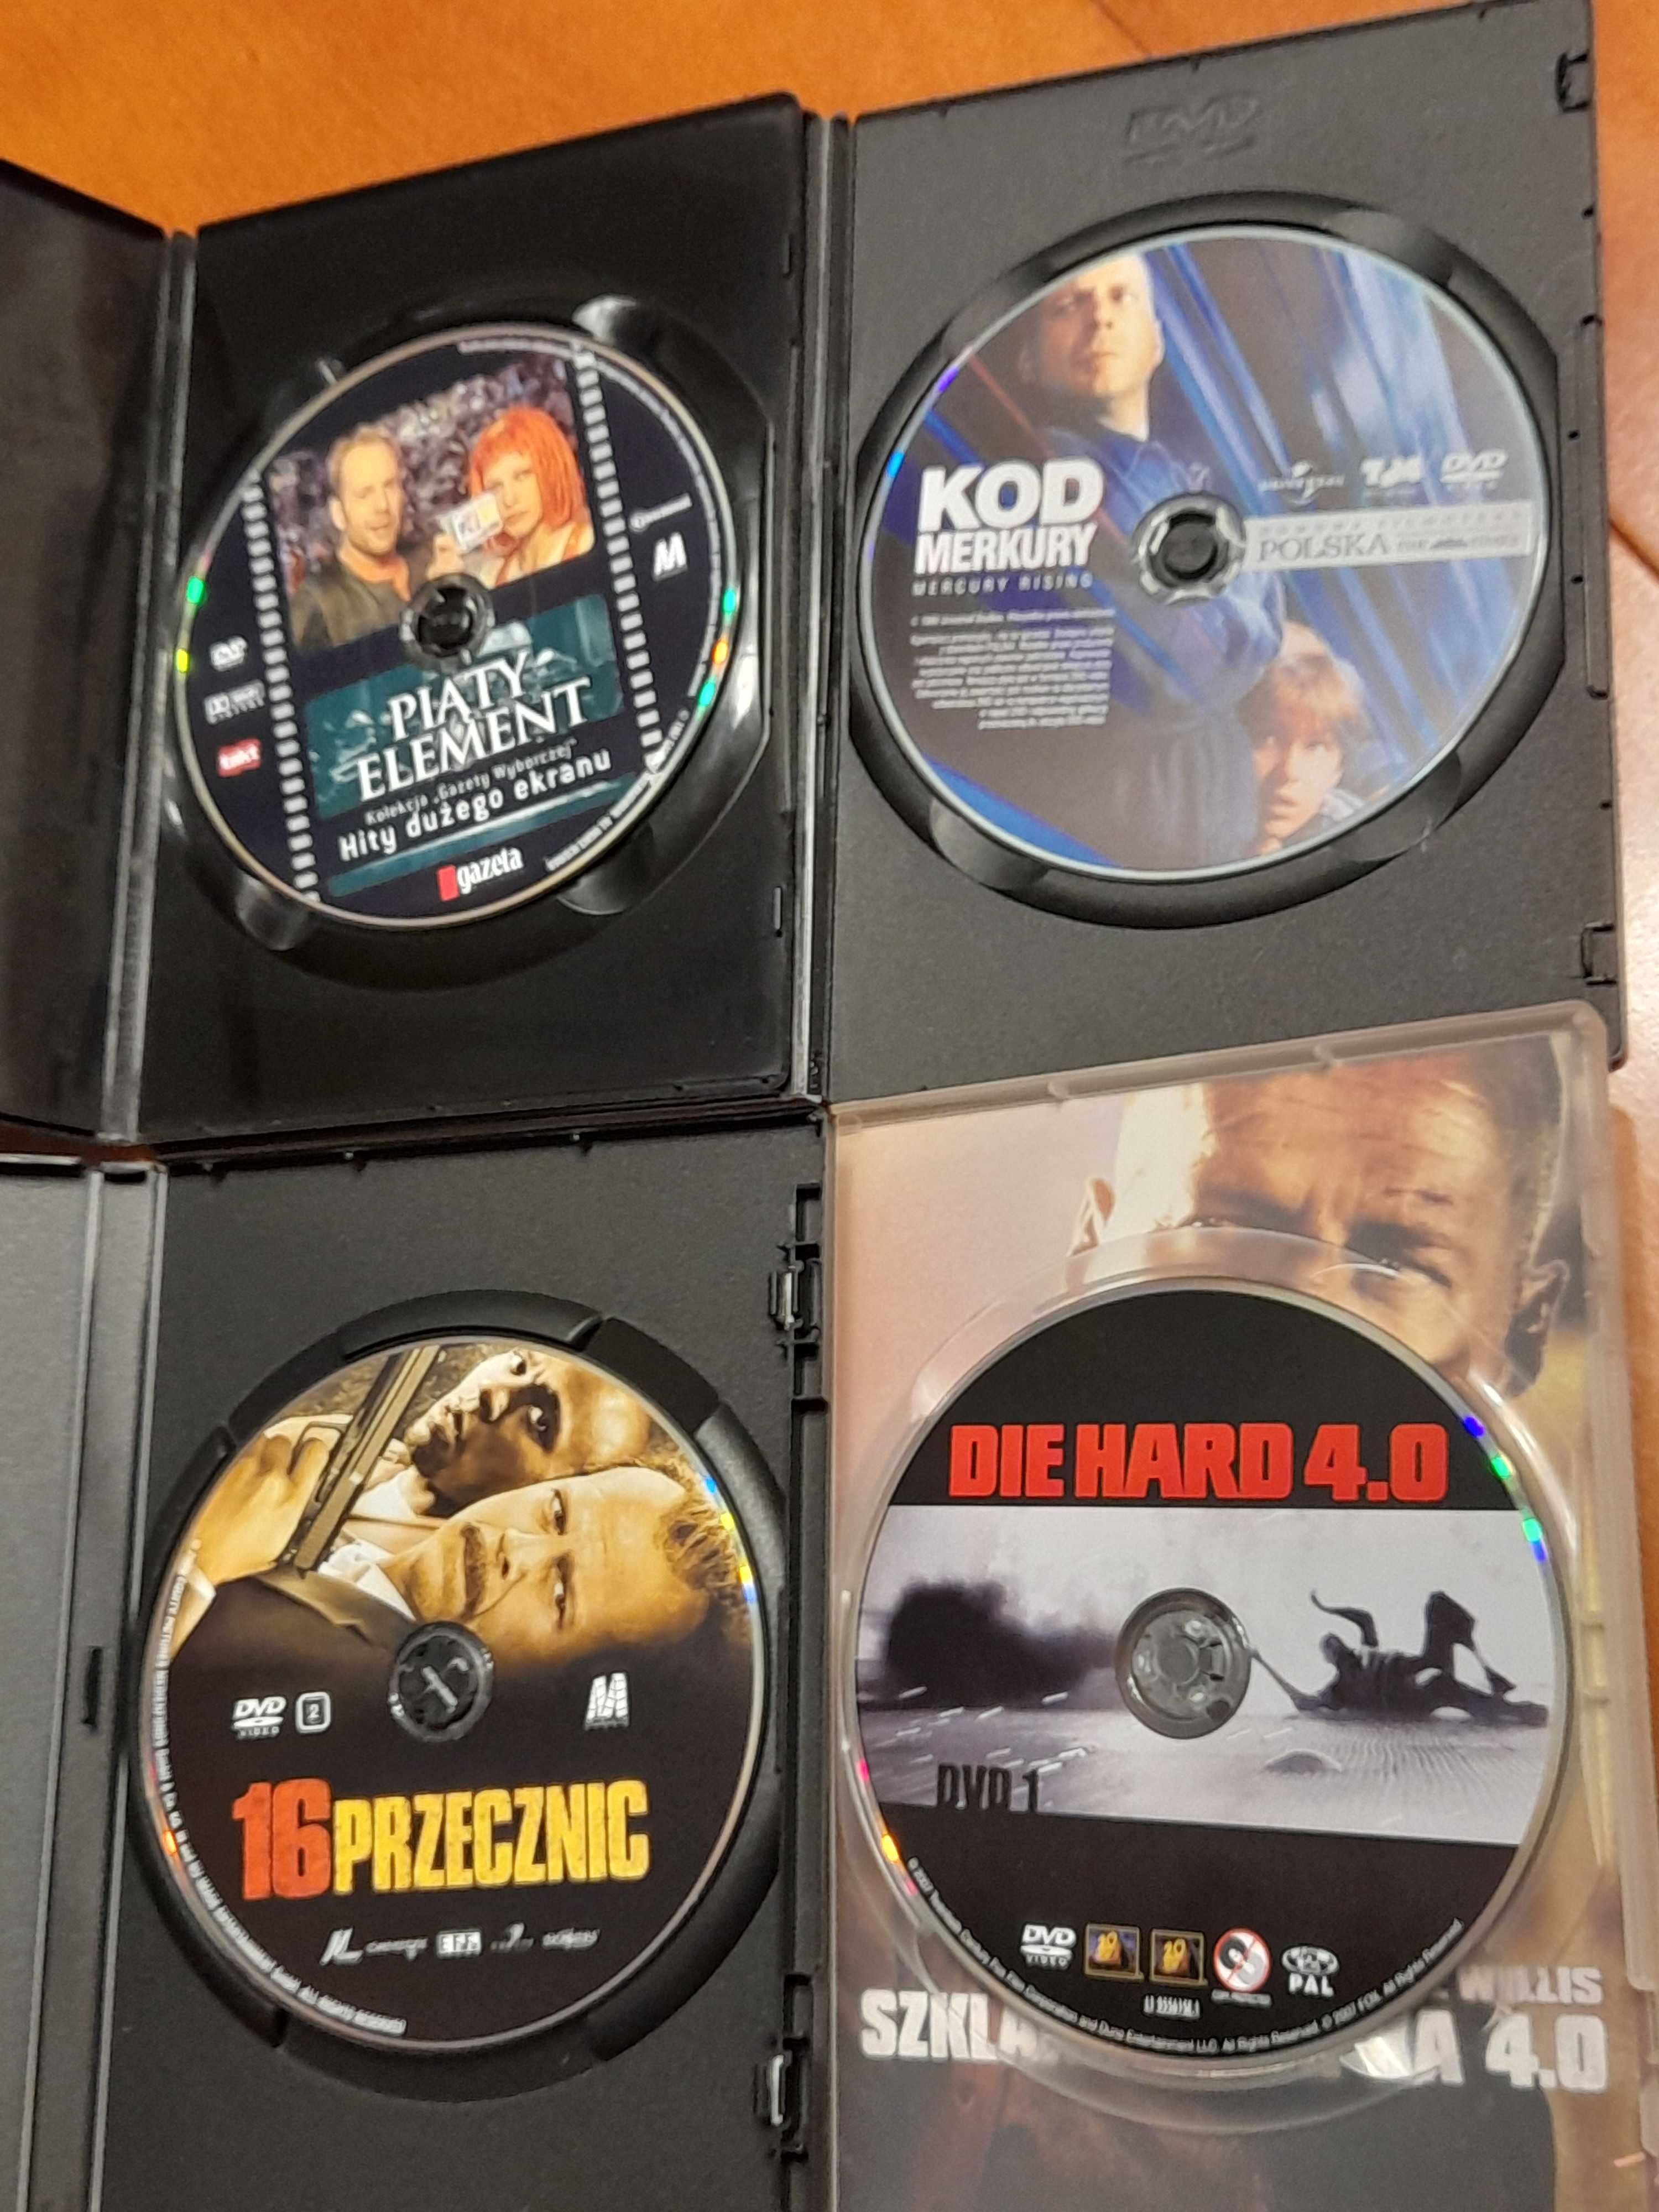 DVD-4 filmy Bruce Willis napisy ,lektor PL